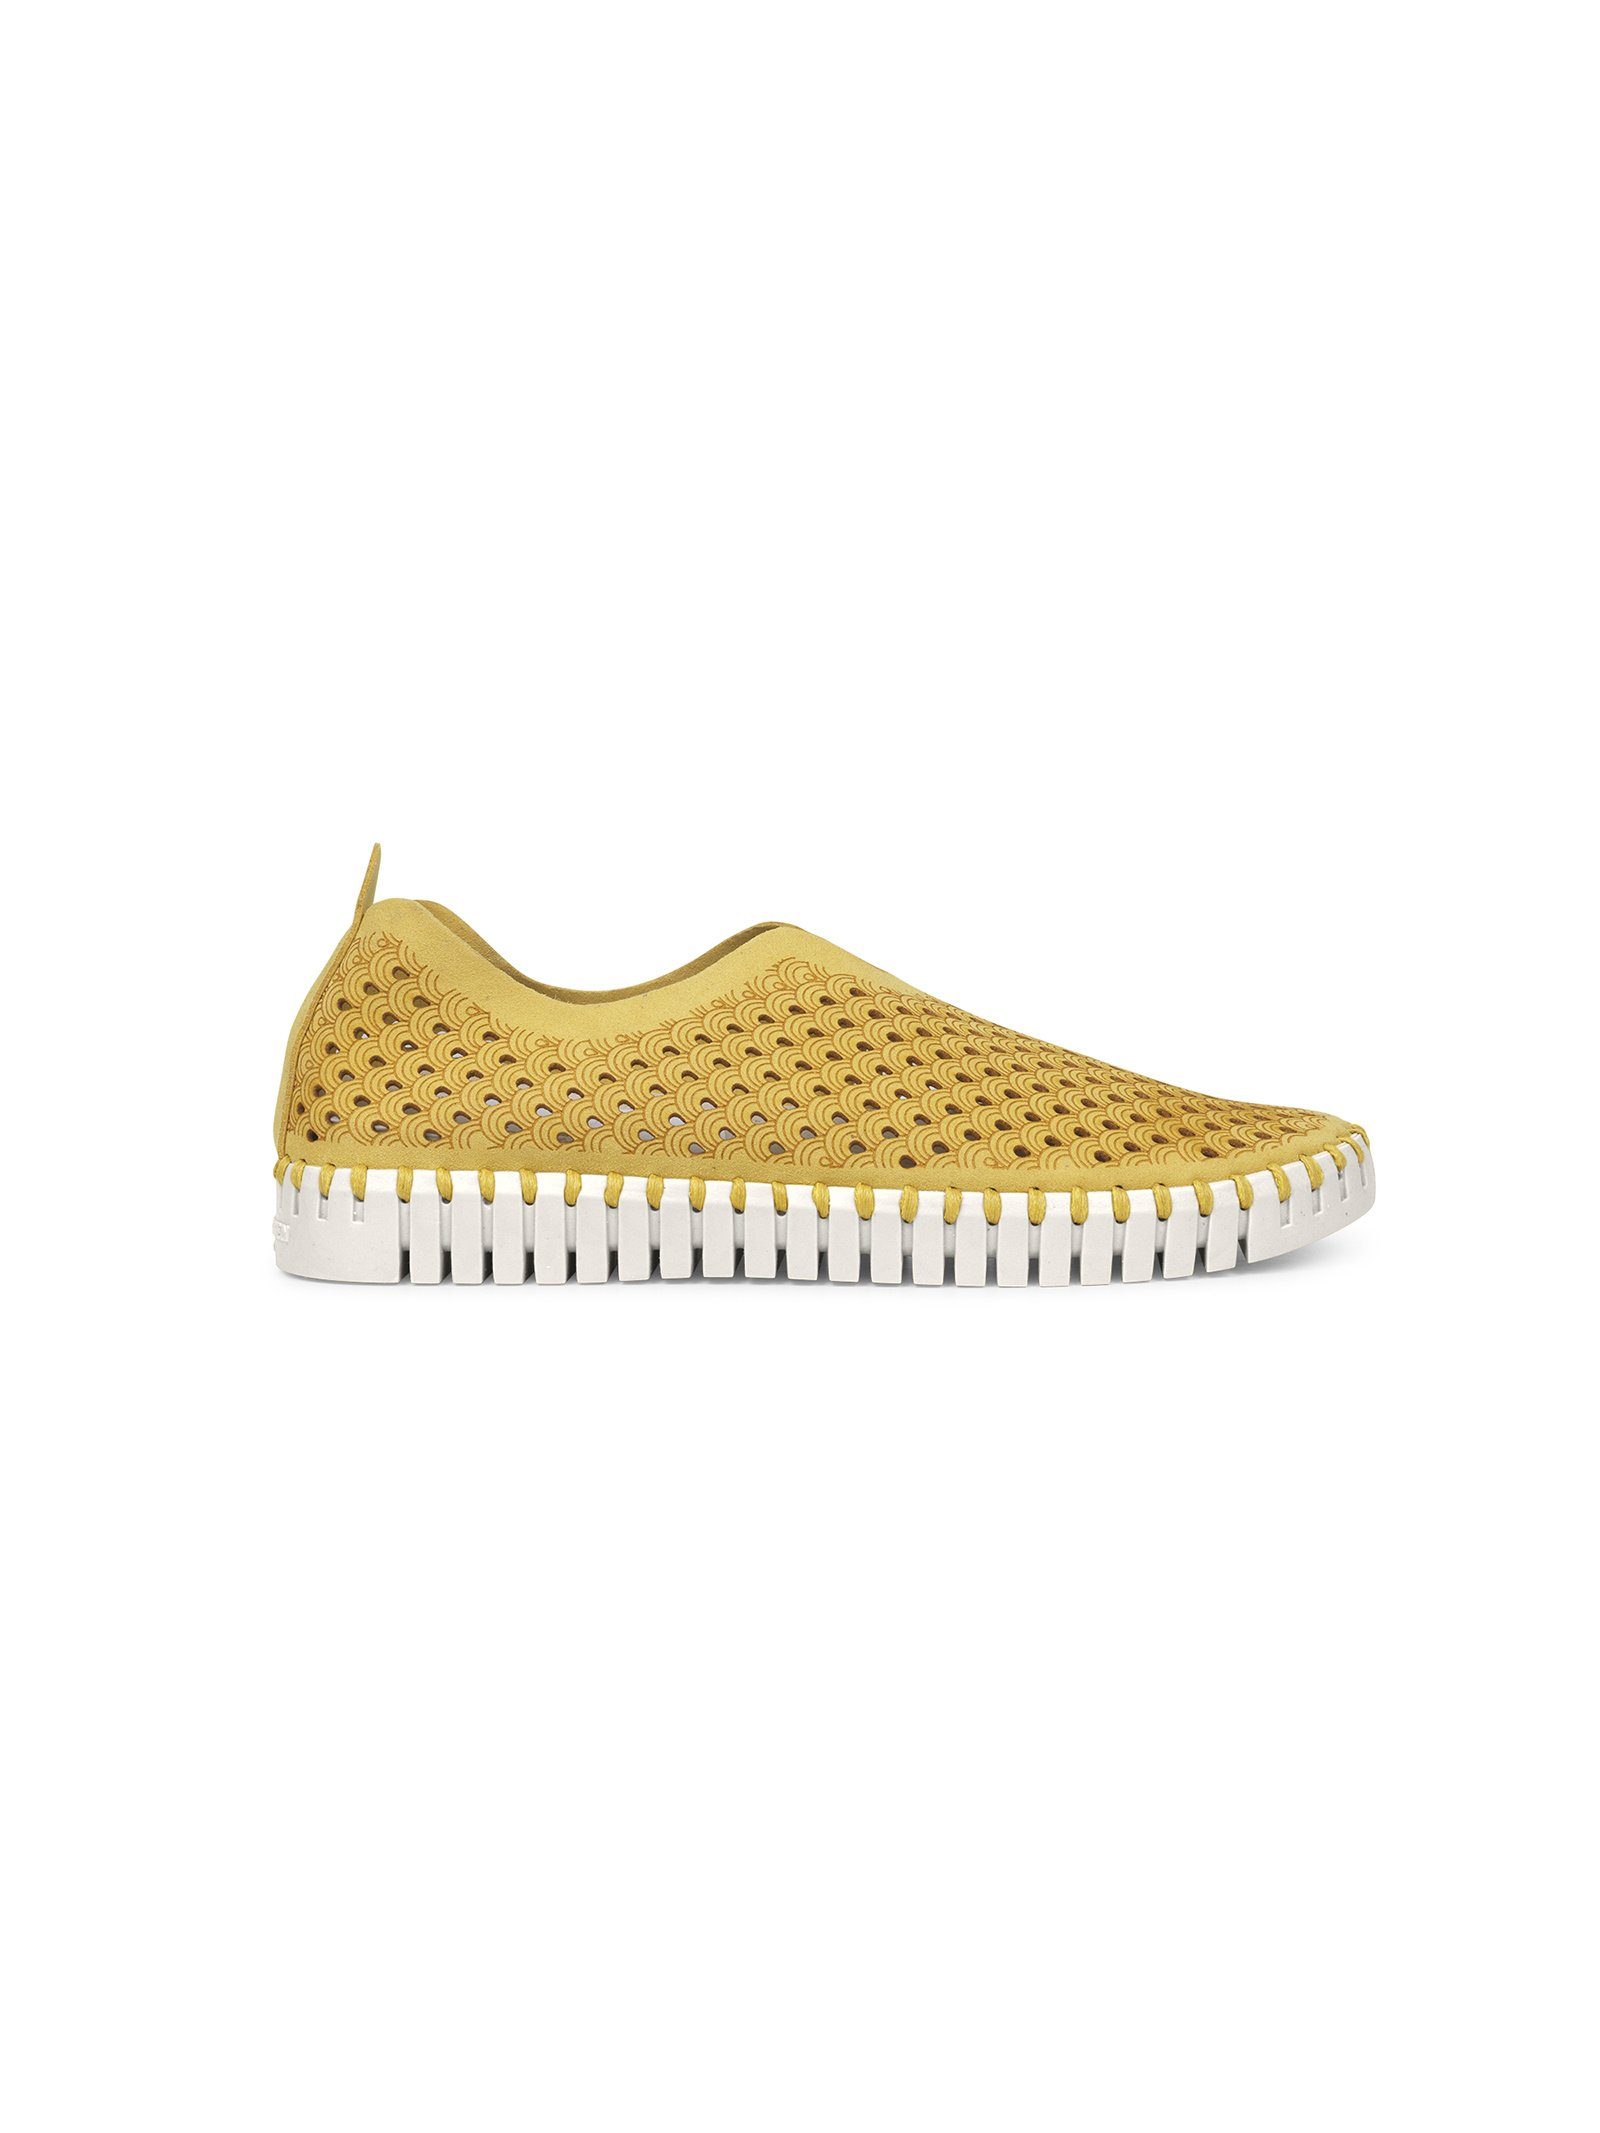 Ilse Jacobsen TULIP3275 Sneaker golden bequem, ohne Laufsohle, rod Praktisch, flexible Klebstoff